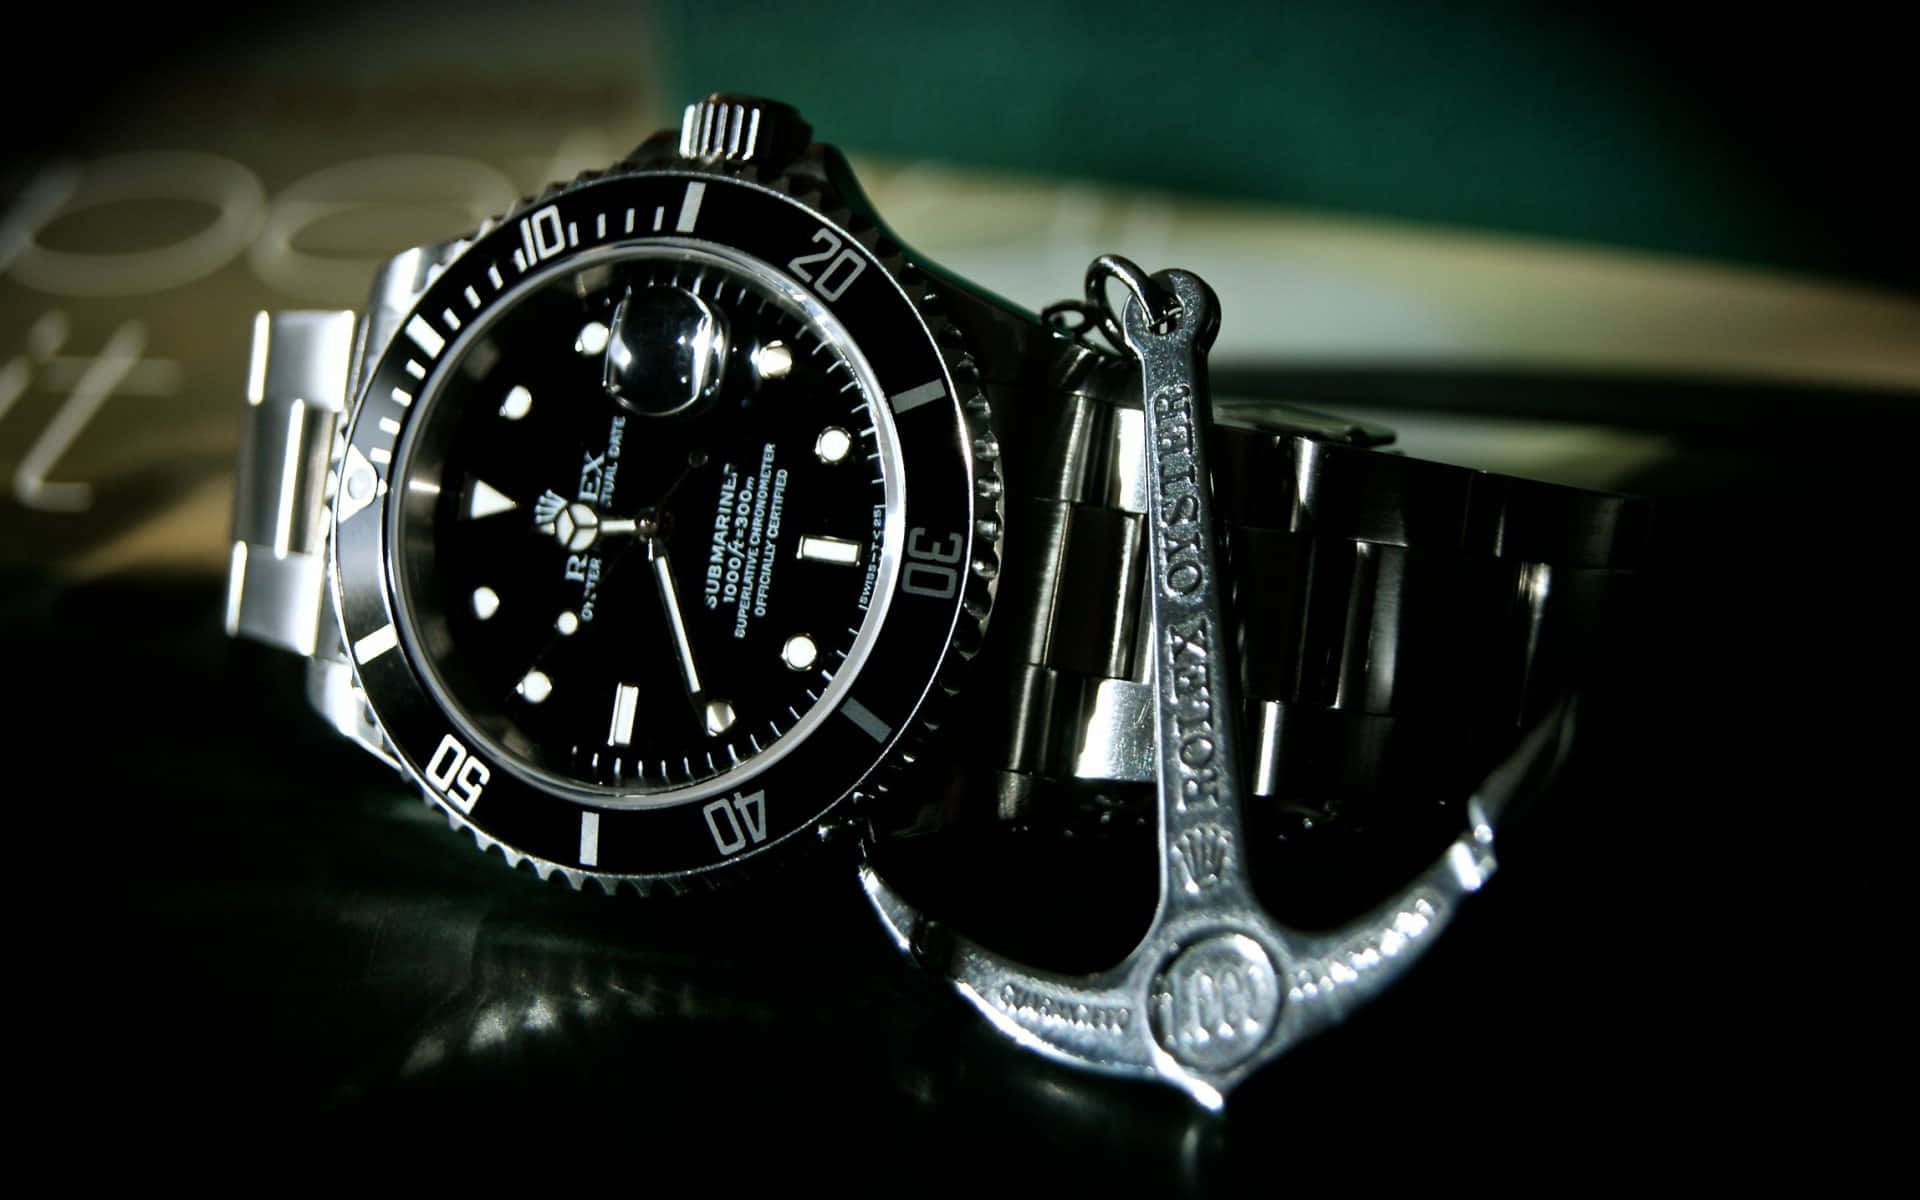 A Classic Rolex Timepiece on a Dark Background